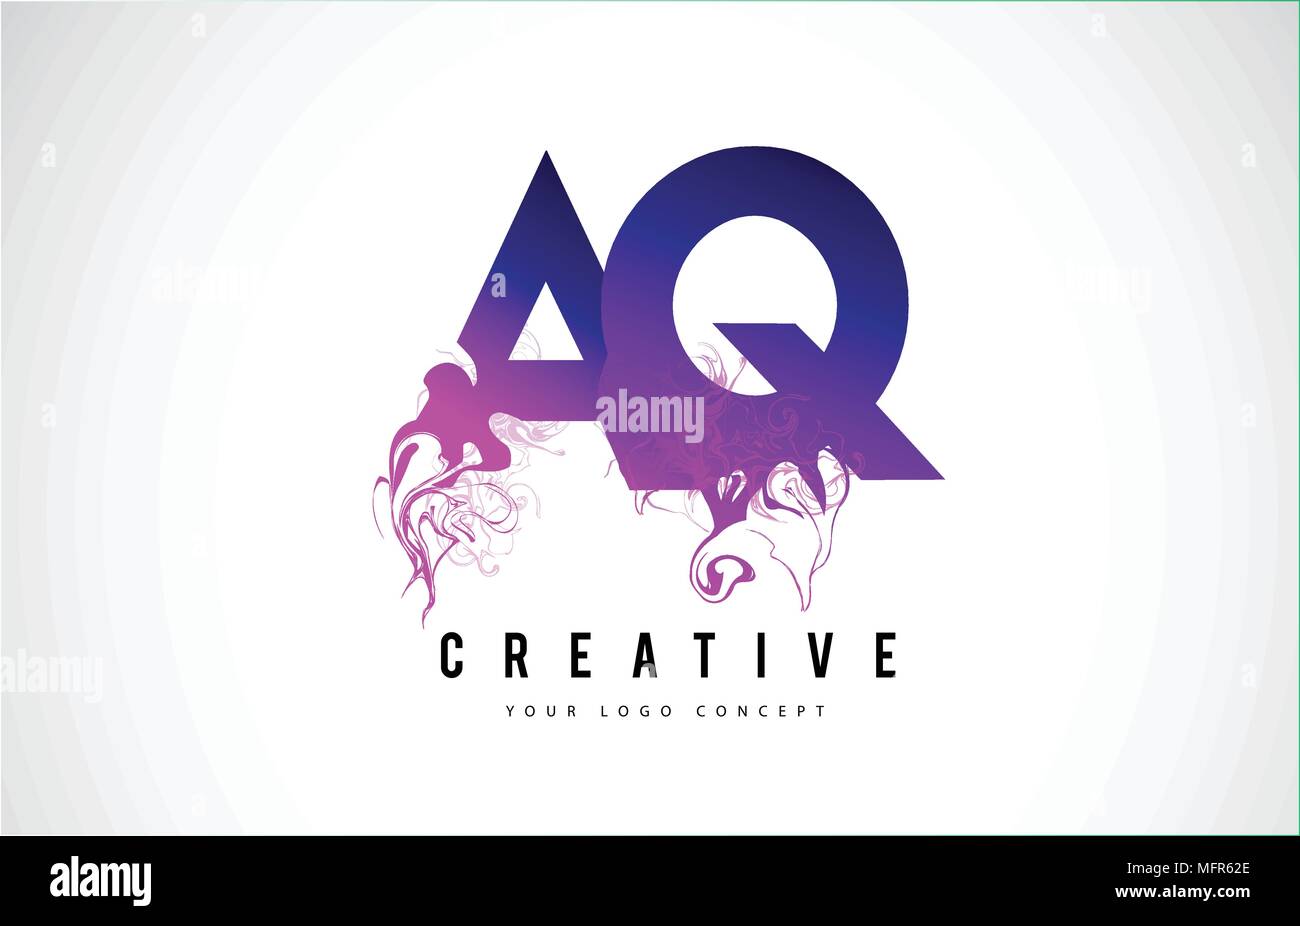 AQ A Q Purple Letter Logo Design with Creative Liquid Effect Flowing Vector Illustration. Stock Vector